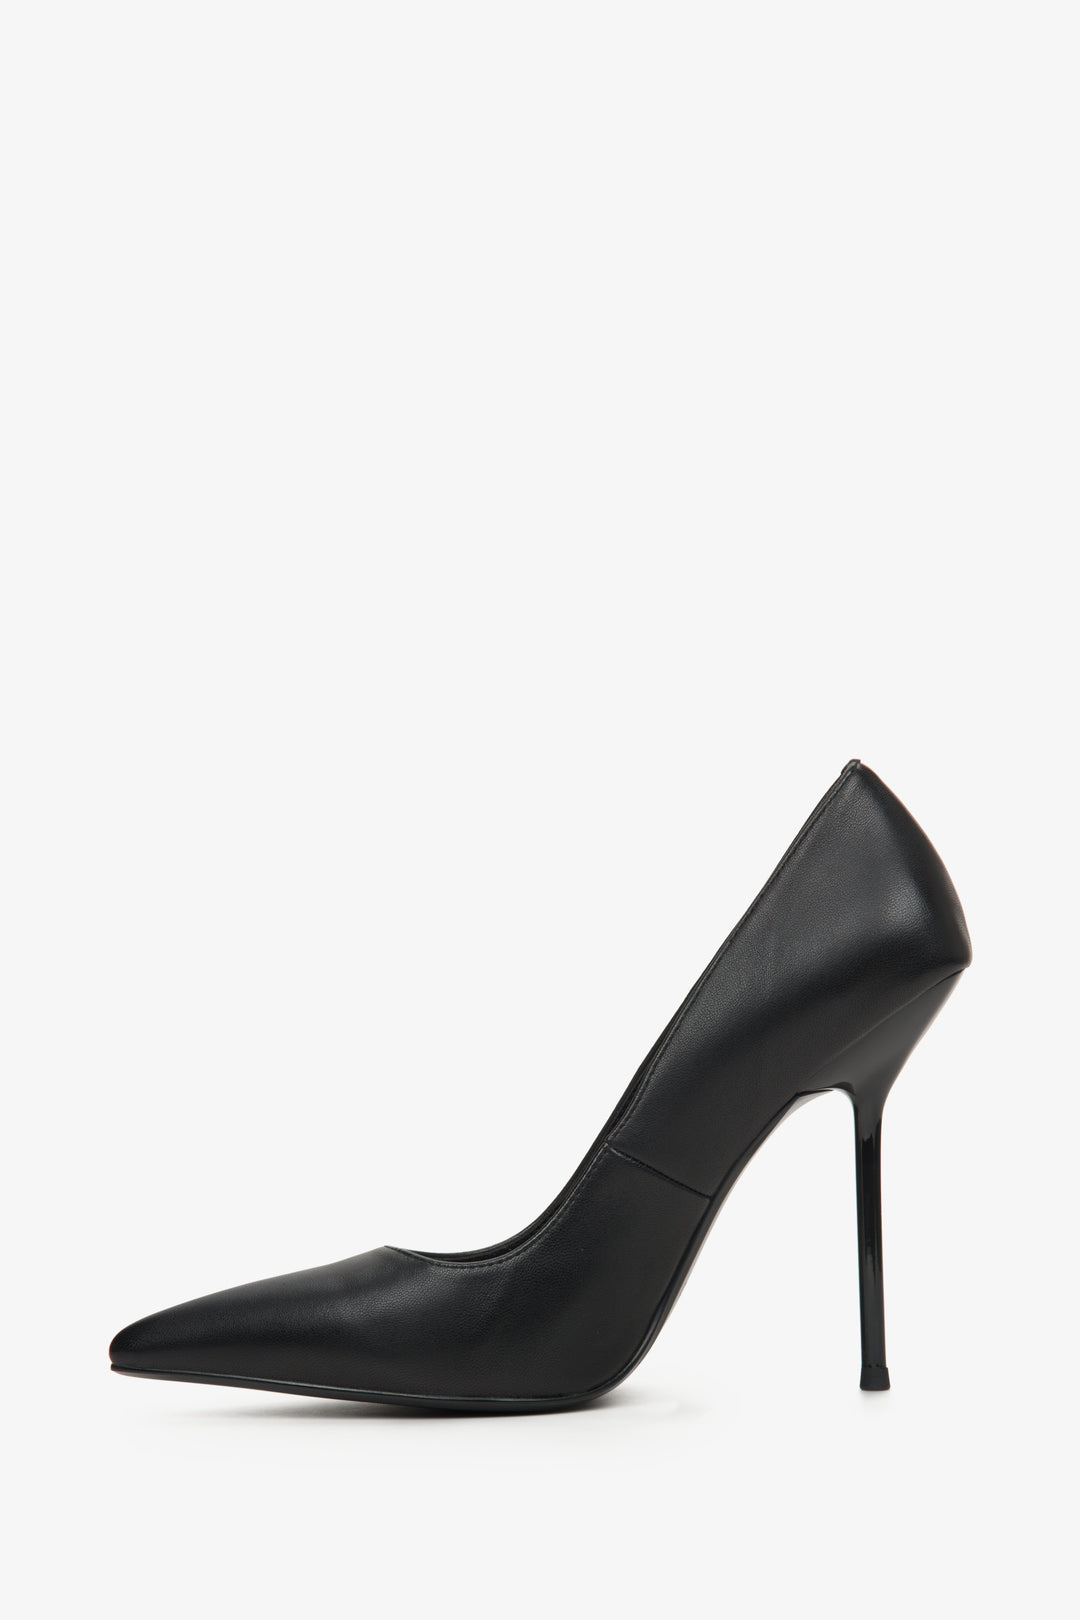 Women's black leather stiletto heels Estro - shoe profile.